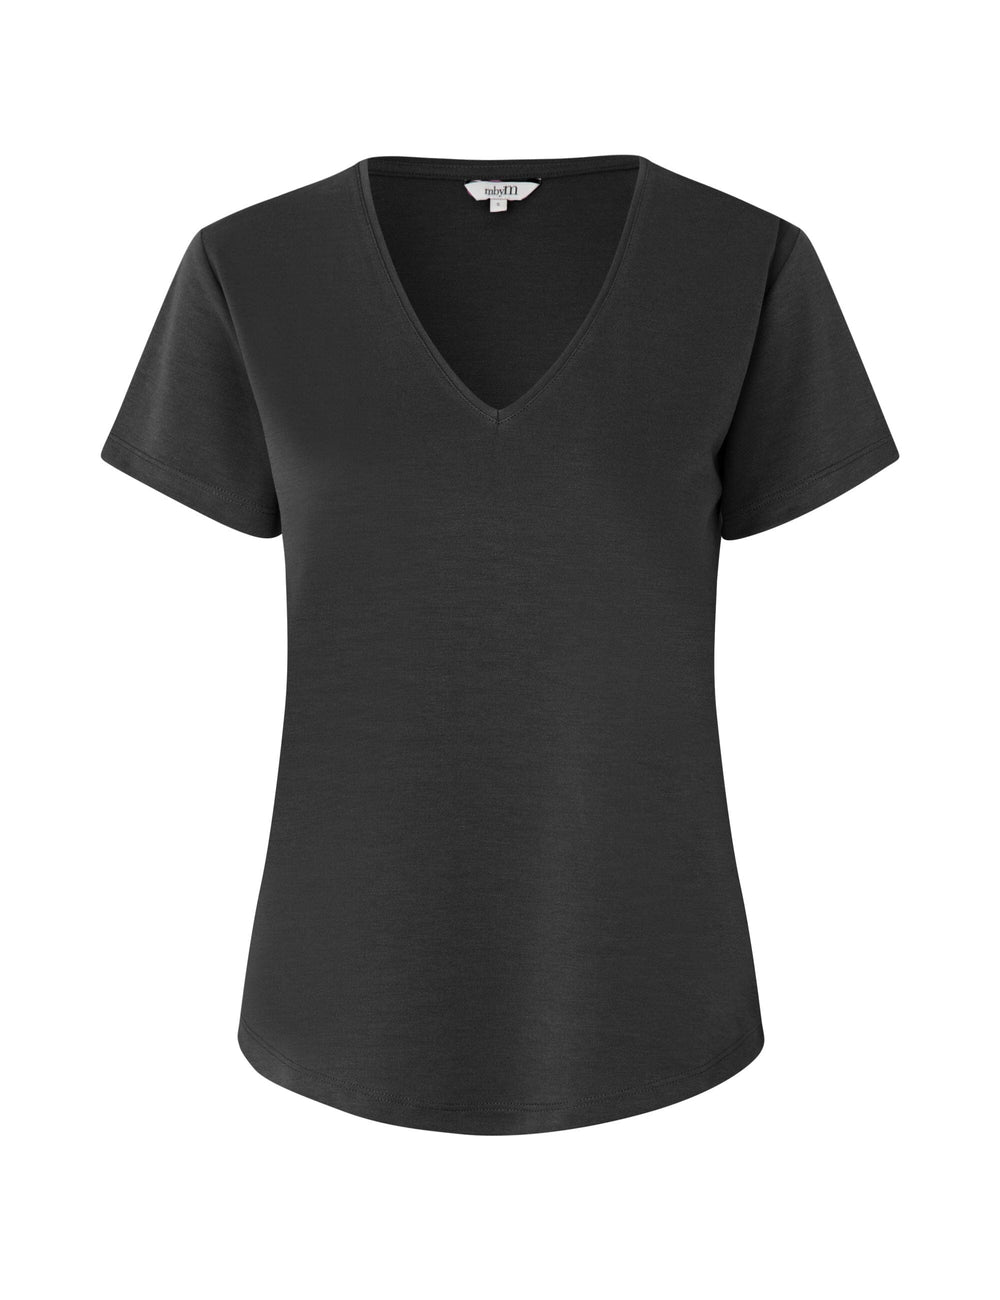 MbyM - Luvanna-M - 880 Black T-shirts 